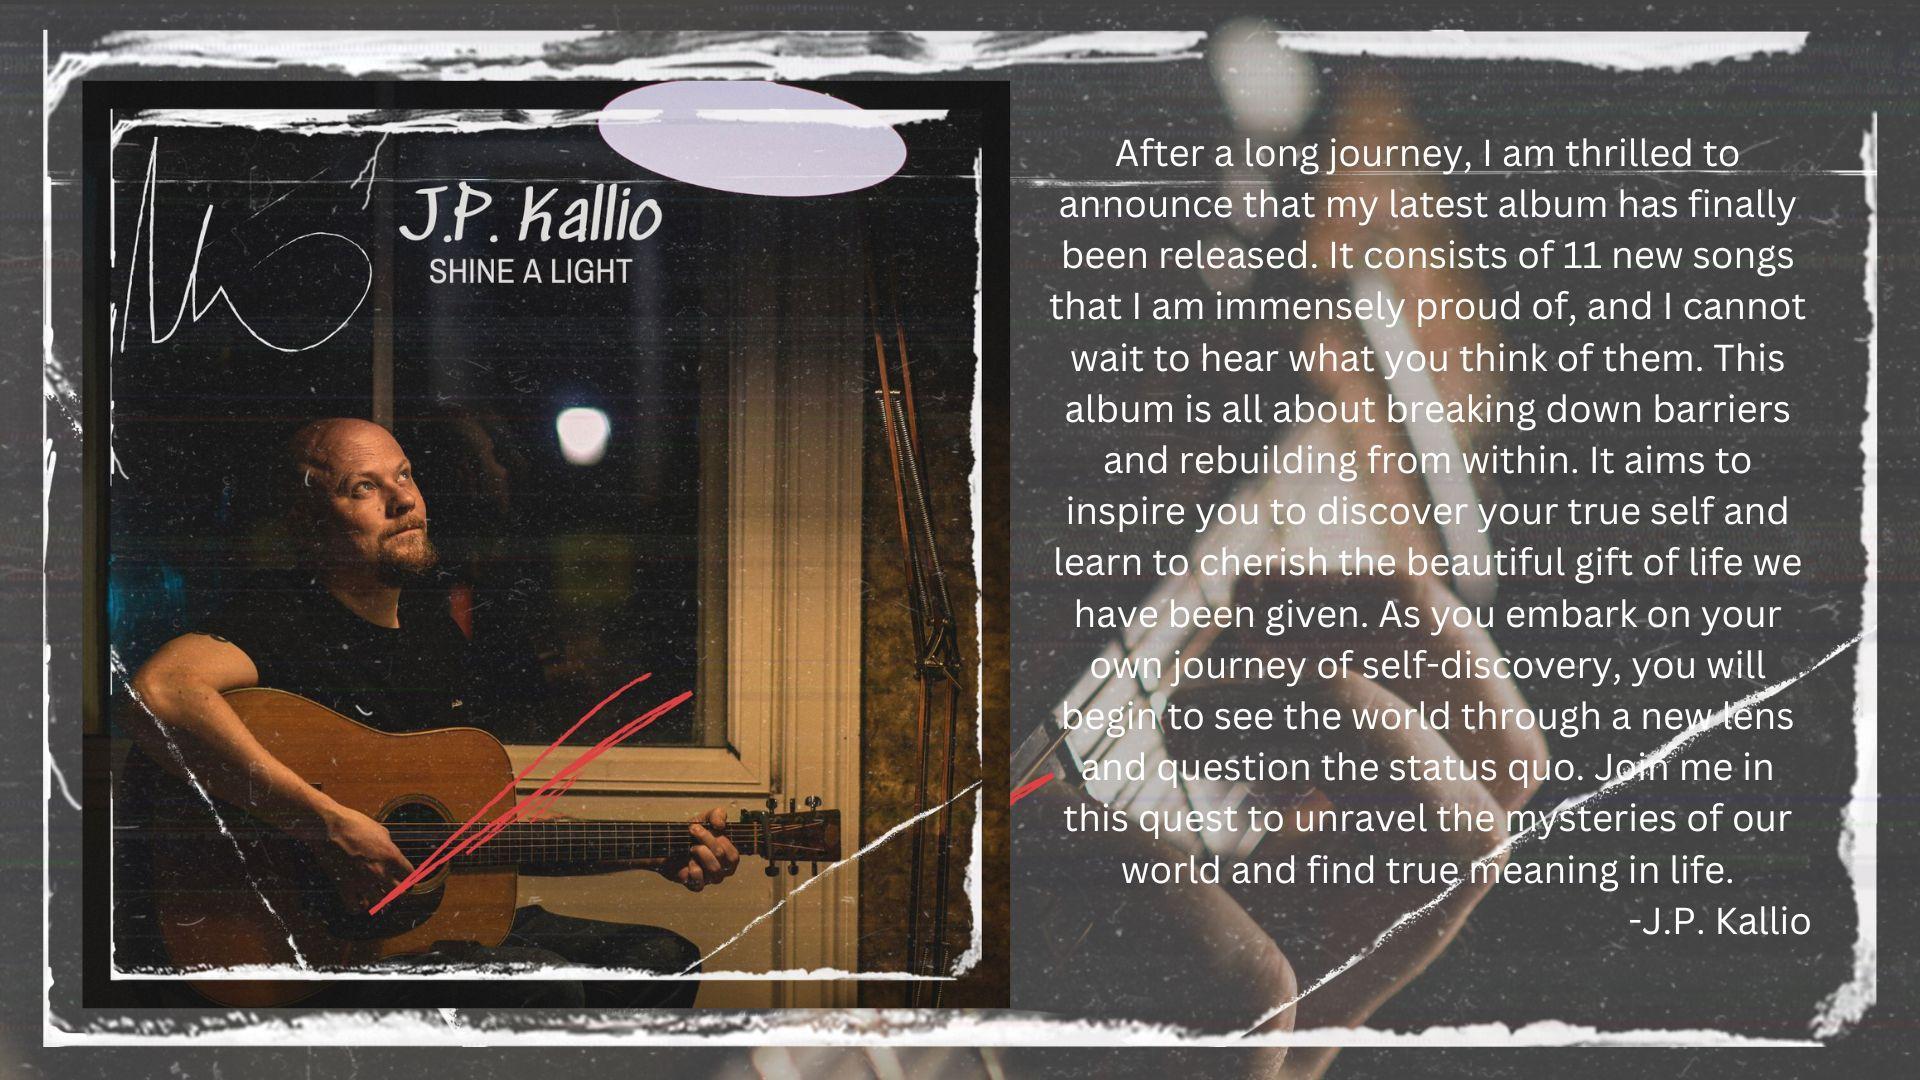 J.P. Kallio's new album Shine a Light out now